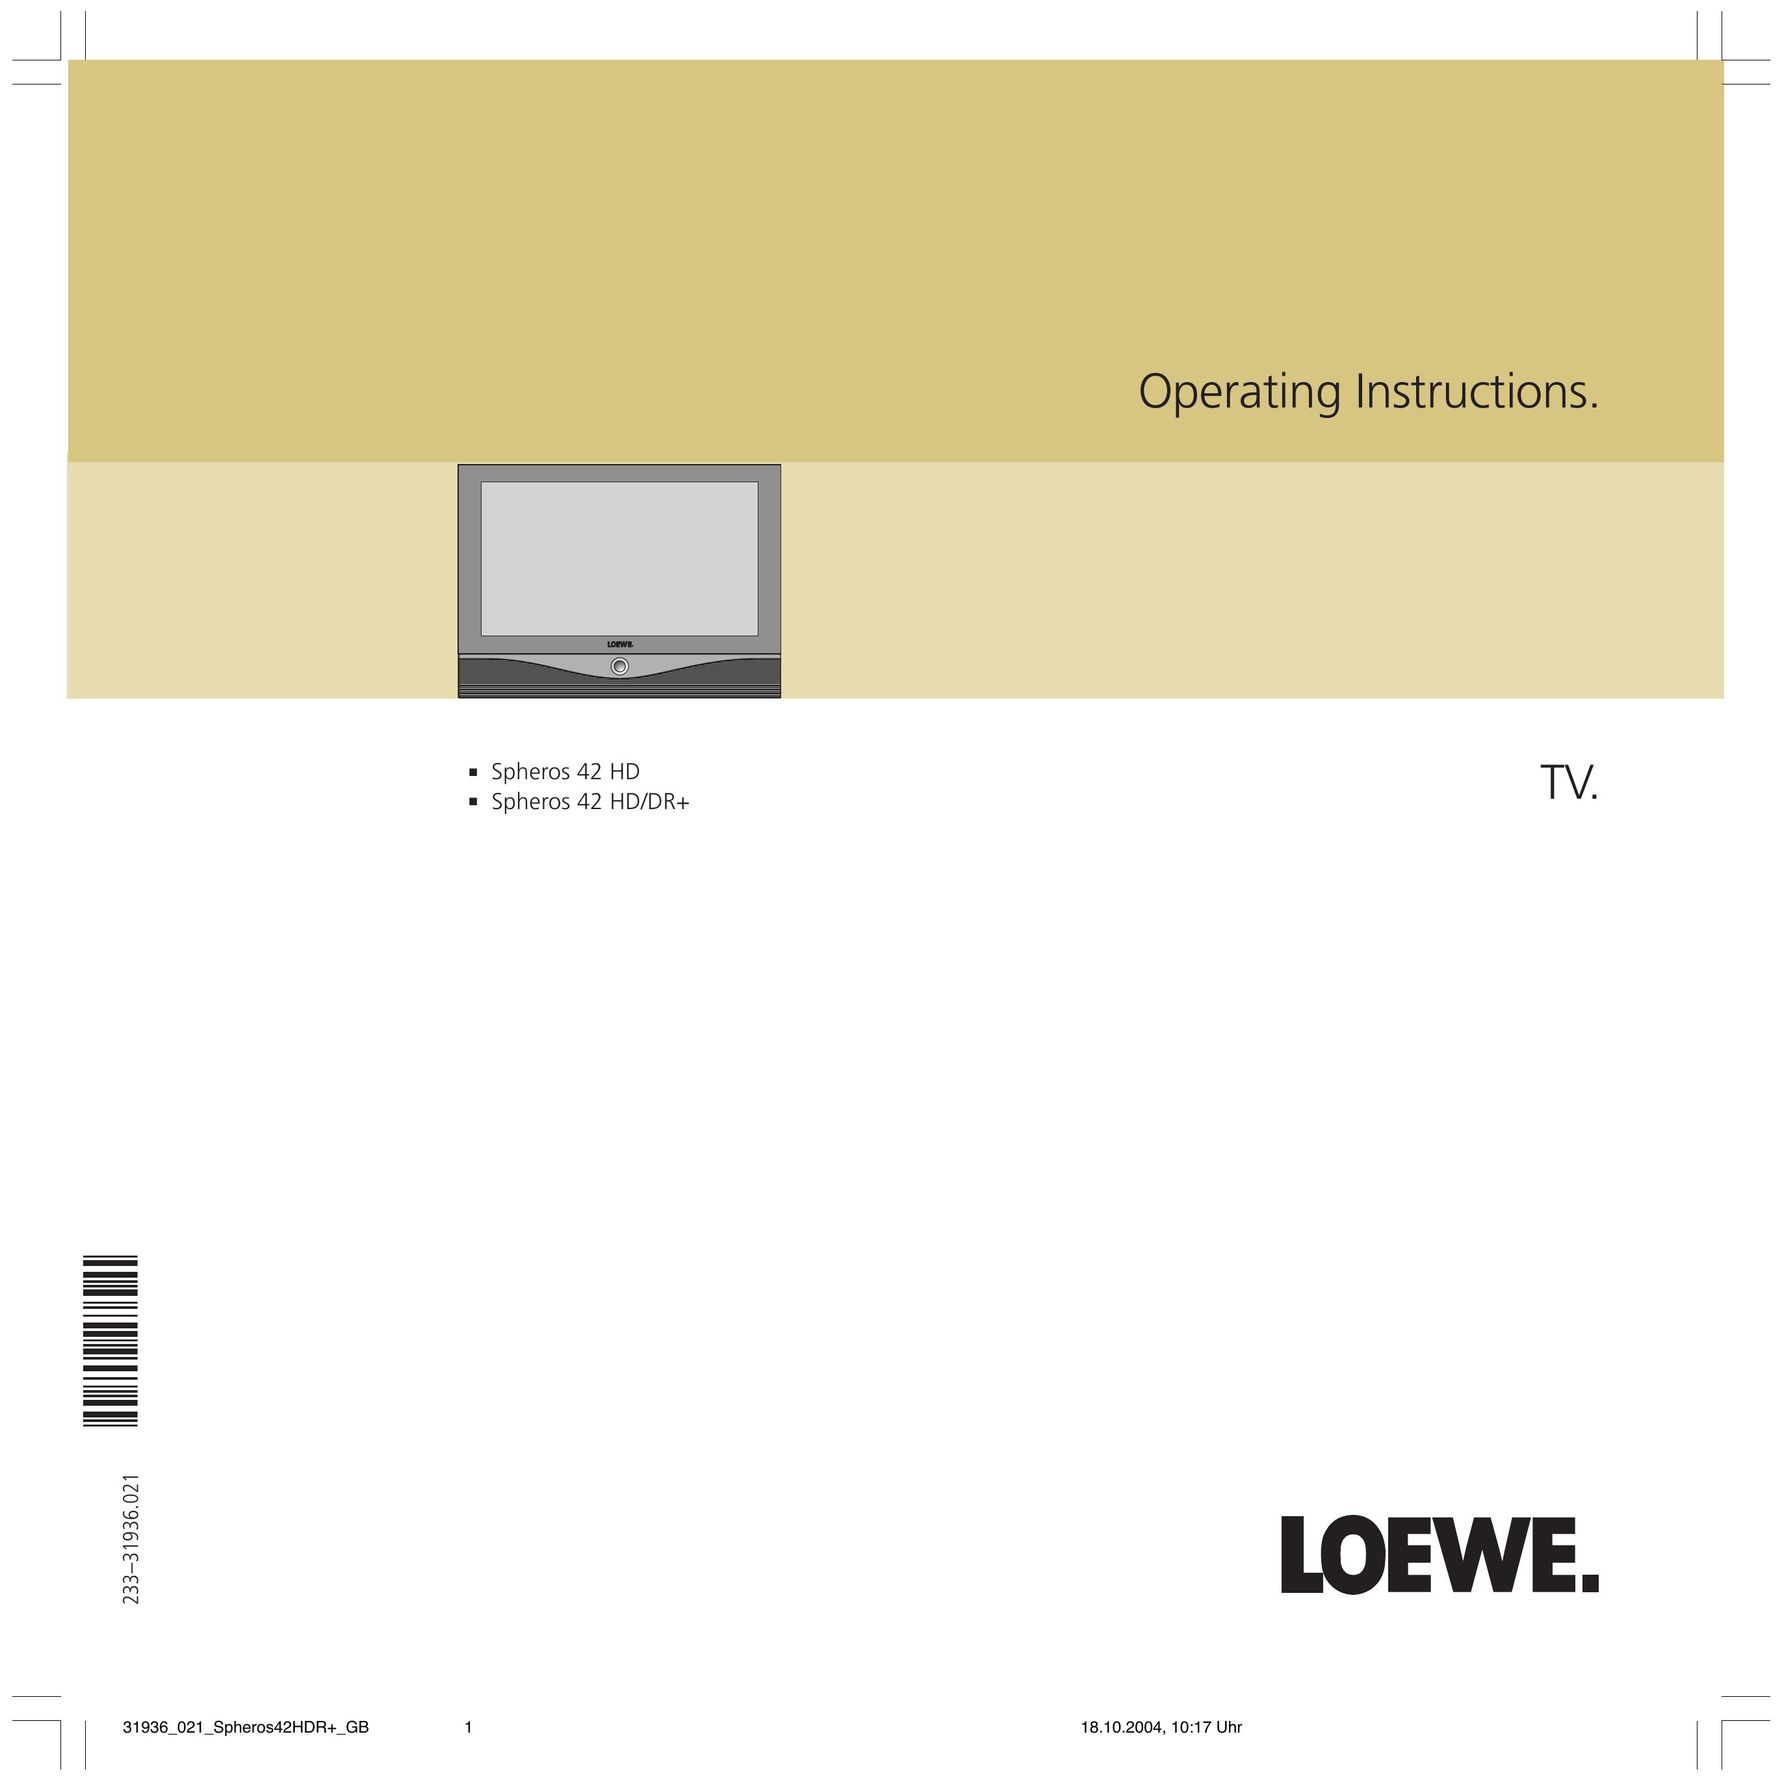 Loewe 42 HD Flat Panel Television User Manual